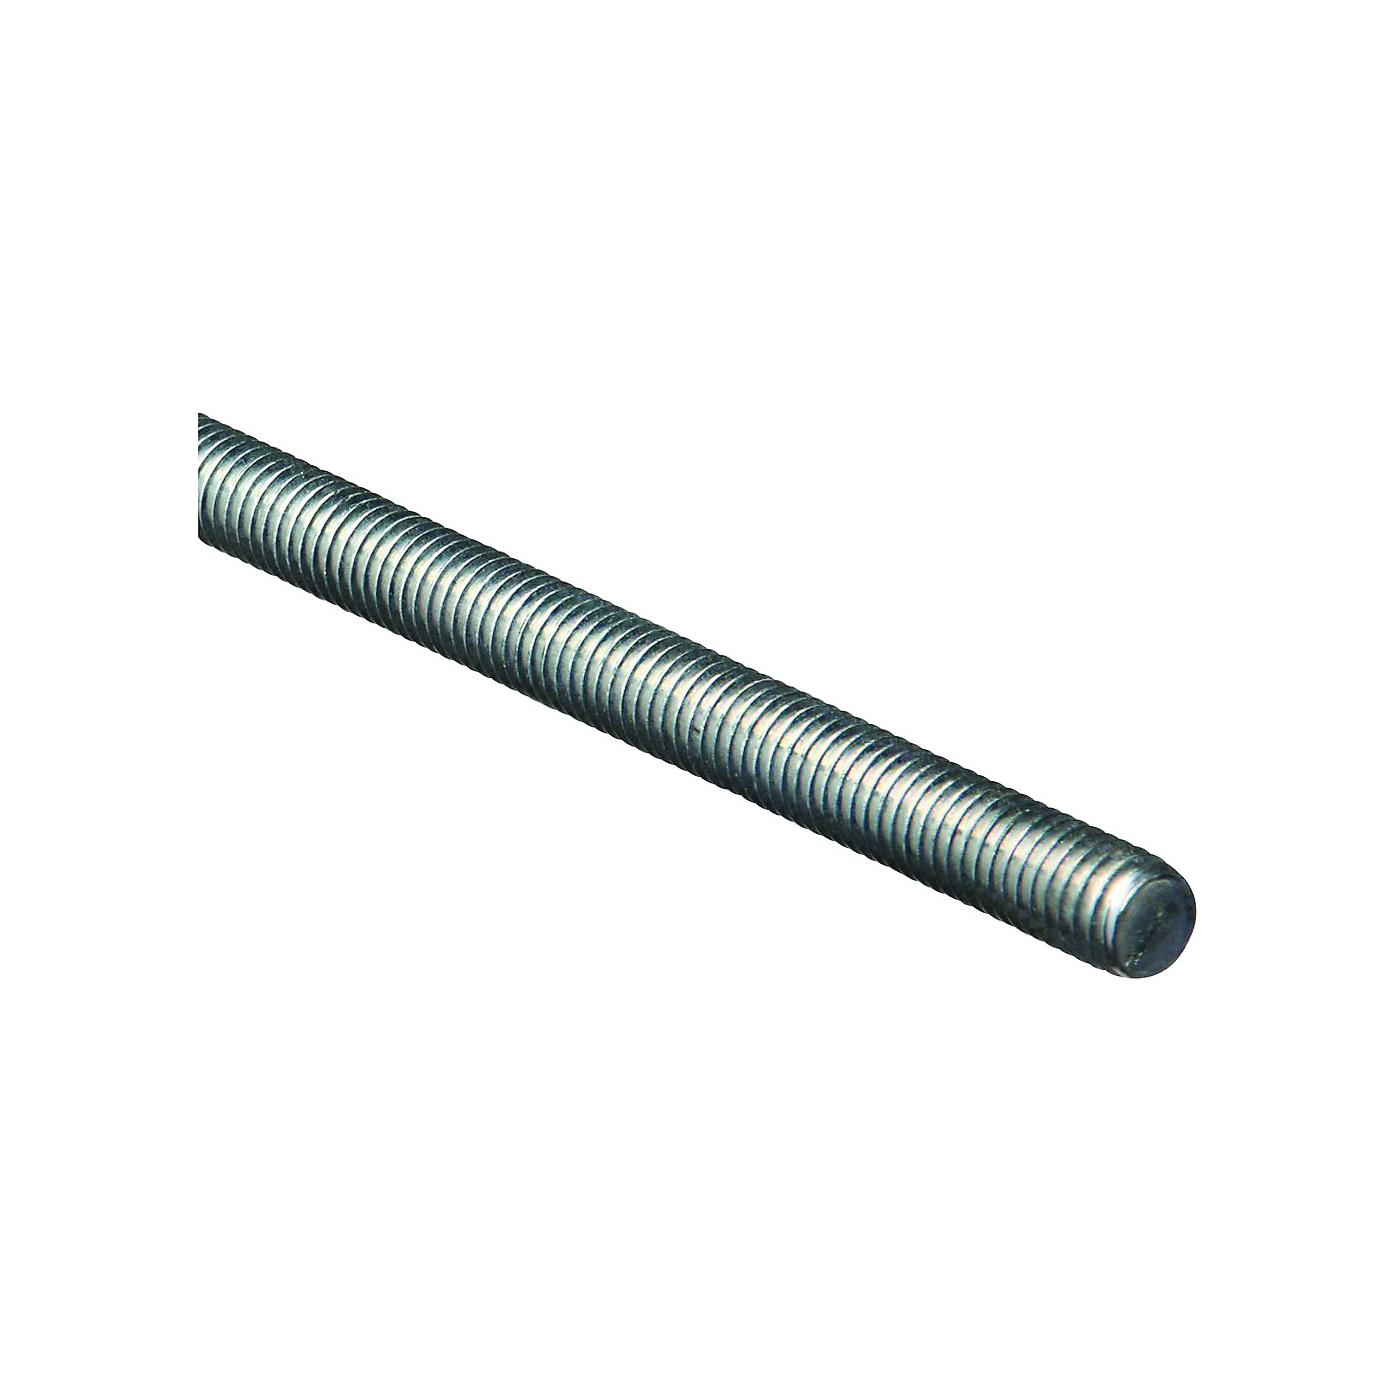 N179-523 Threaded Rod, 7/16-14 Thread, 36 in L, A Grade, Steel, Zinc, UNC Thread